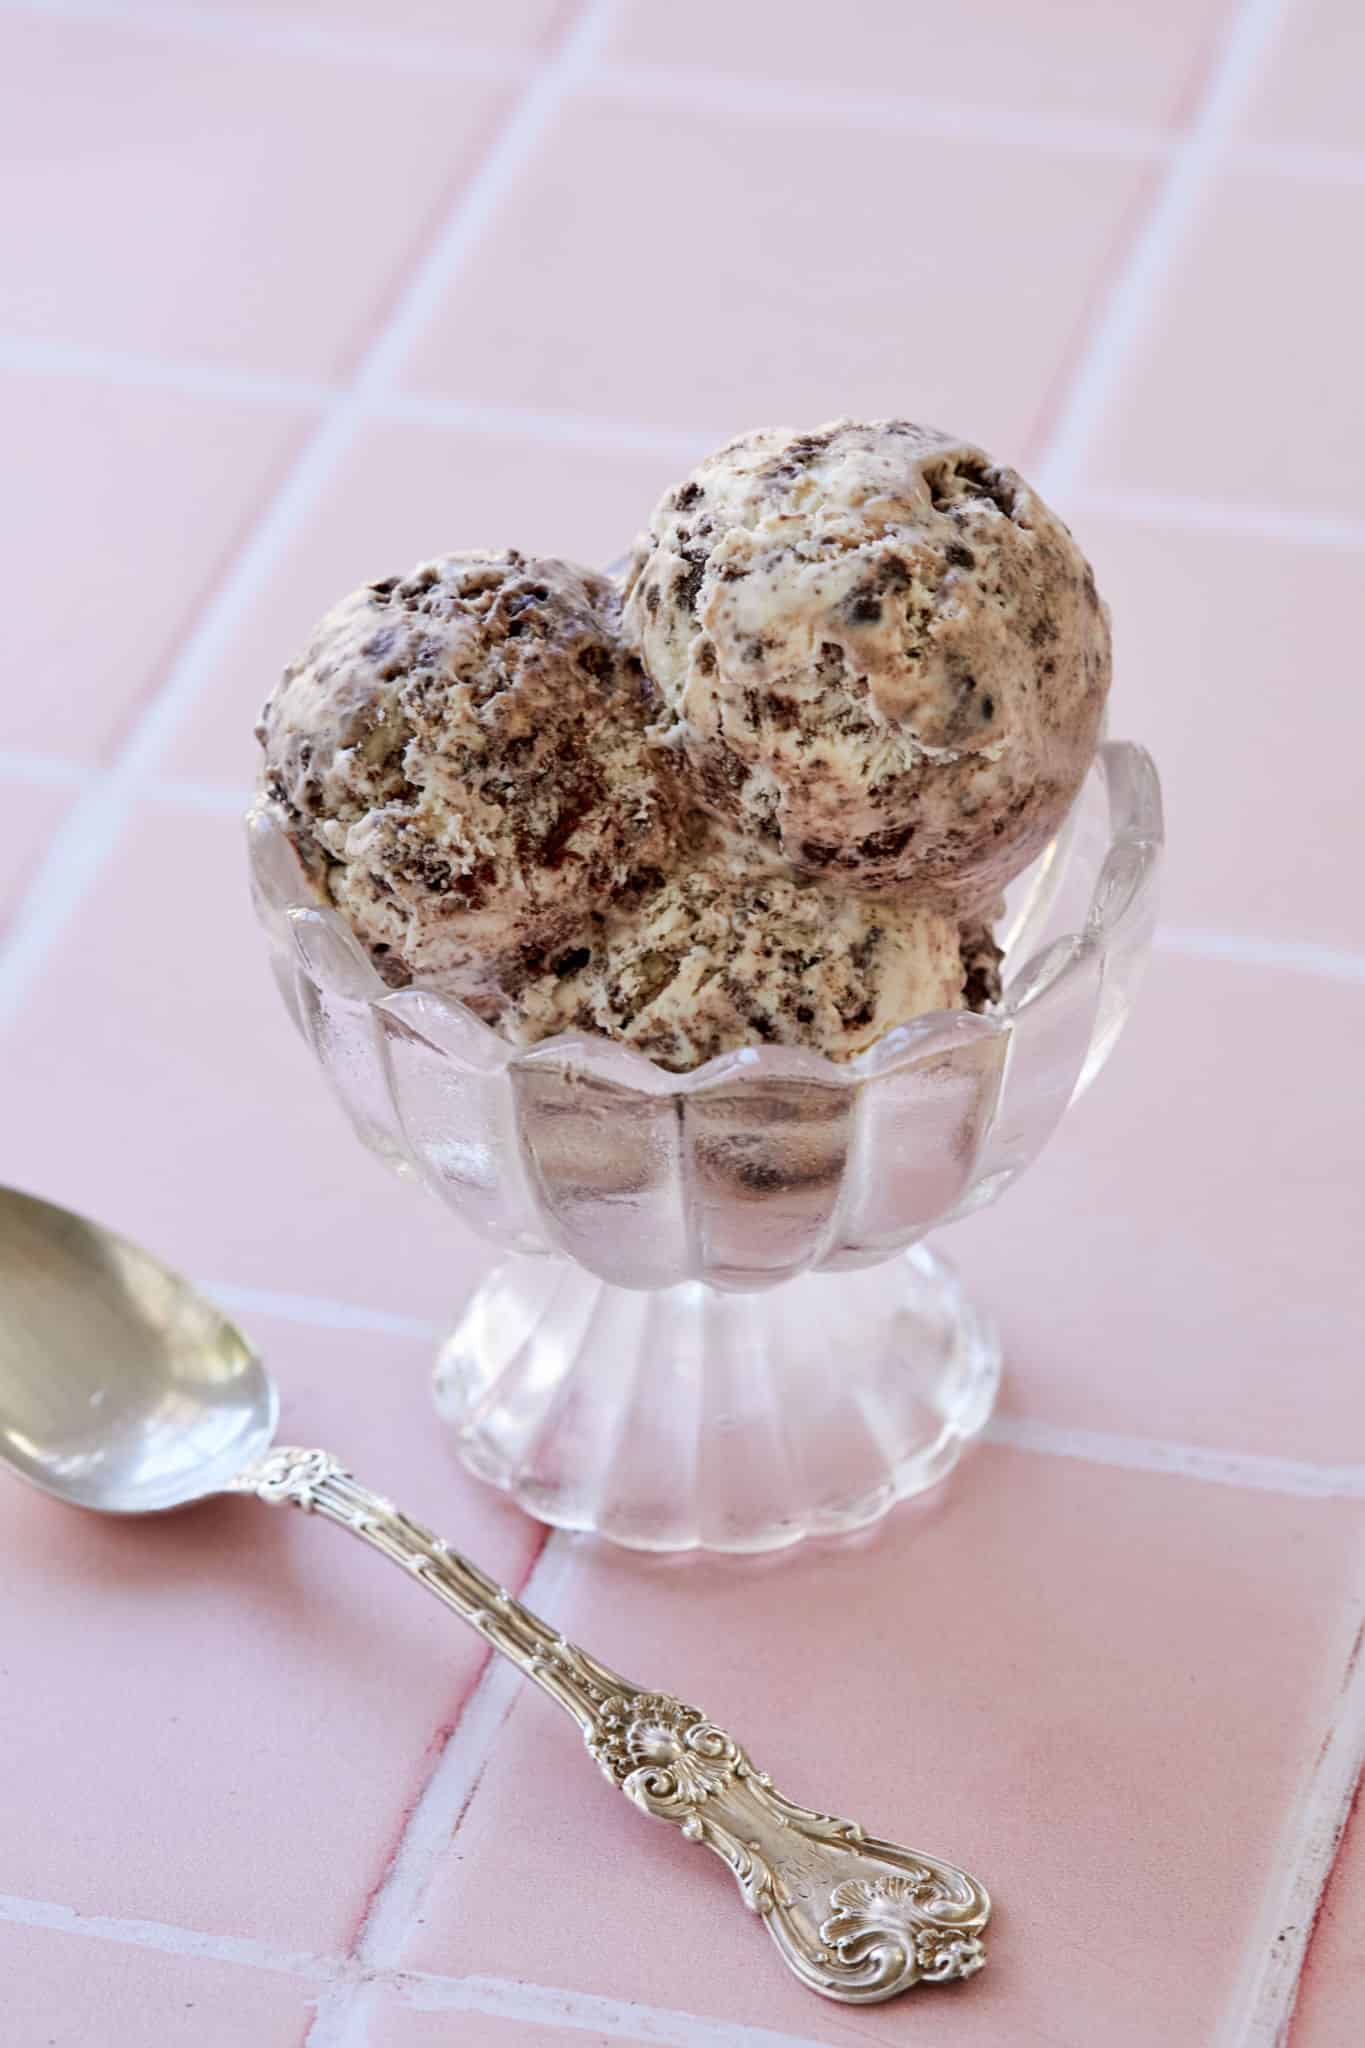 https://www.biggerbolderbaking.com/wp-content/uploads/2017/05/Cookies-Cream-2-Ingredient-Ice-cream2-scaled.jpg